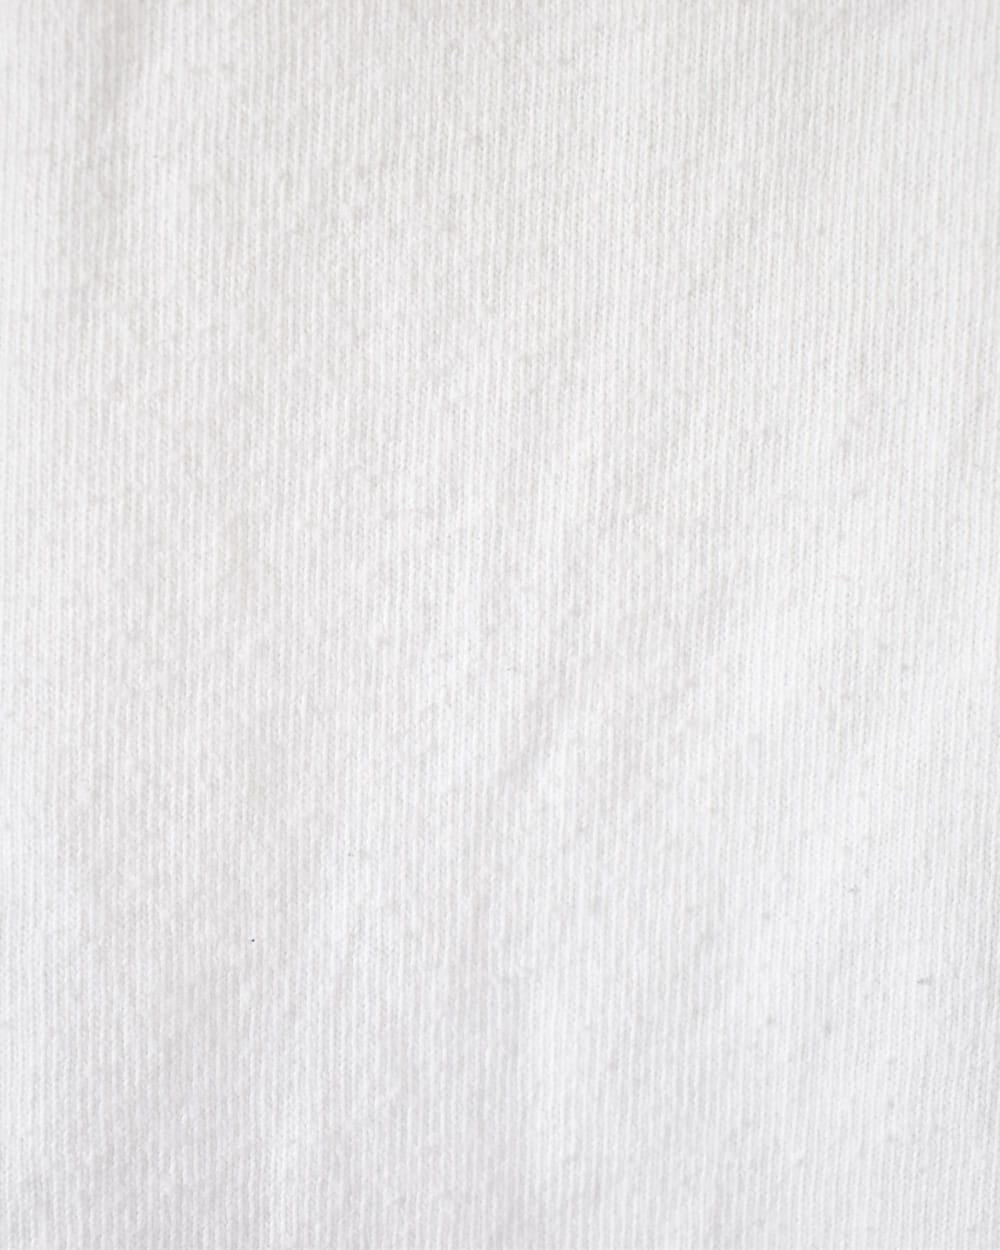 White Tommy Jeans T-Shirt - Medium